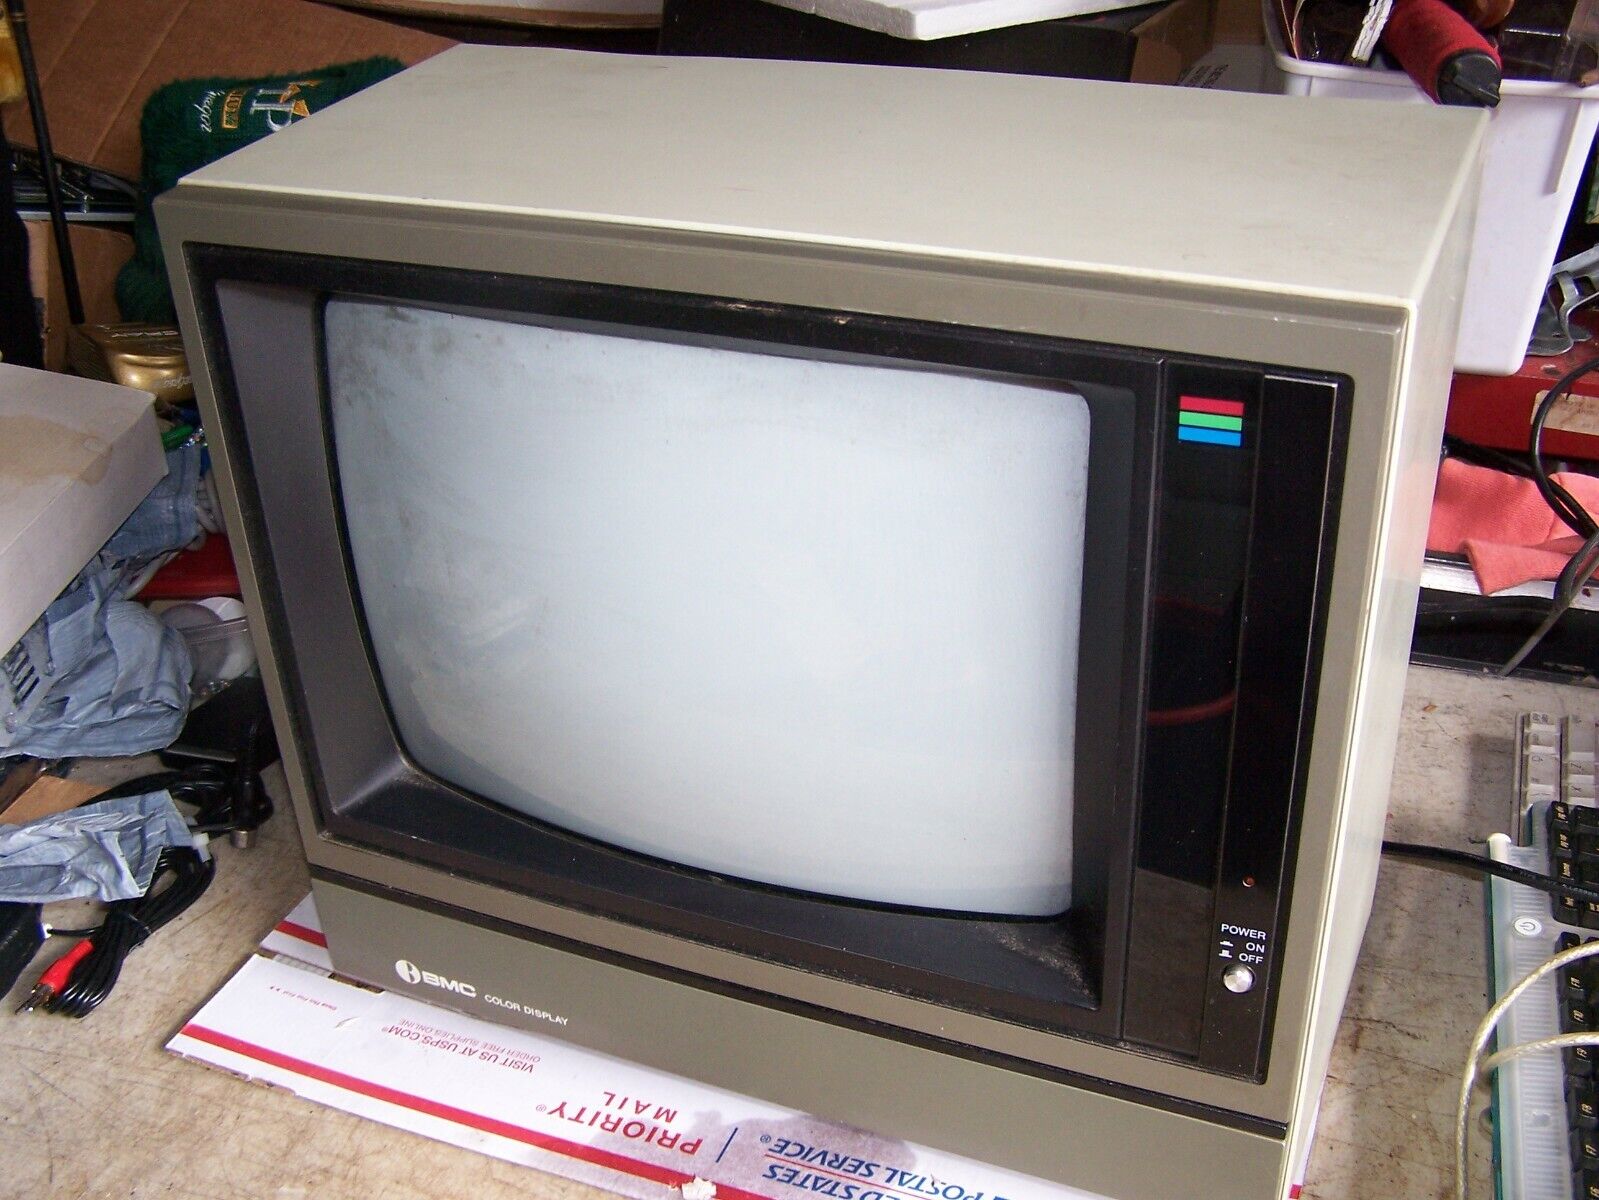 Vintage 1982 BMC Color Display Monitor BM-1401 - Estate Sale 